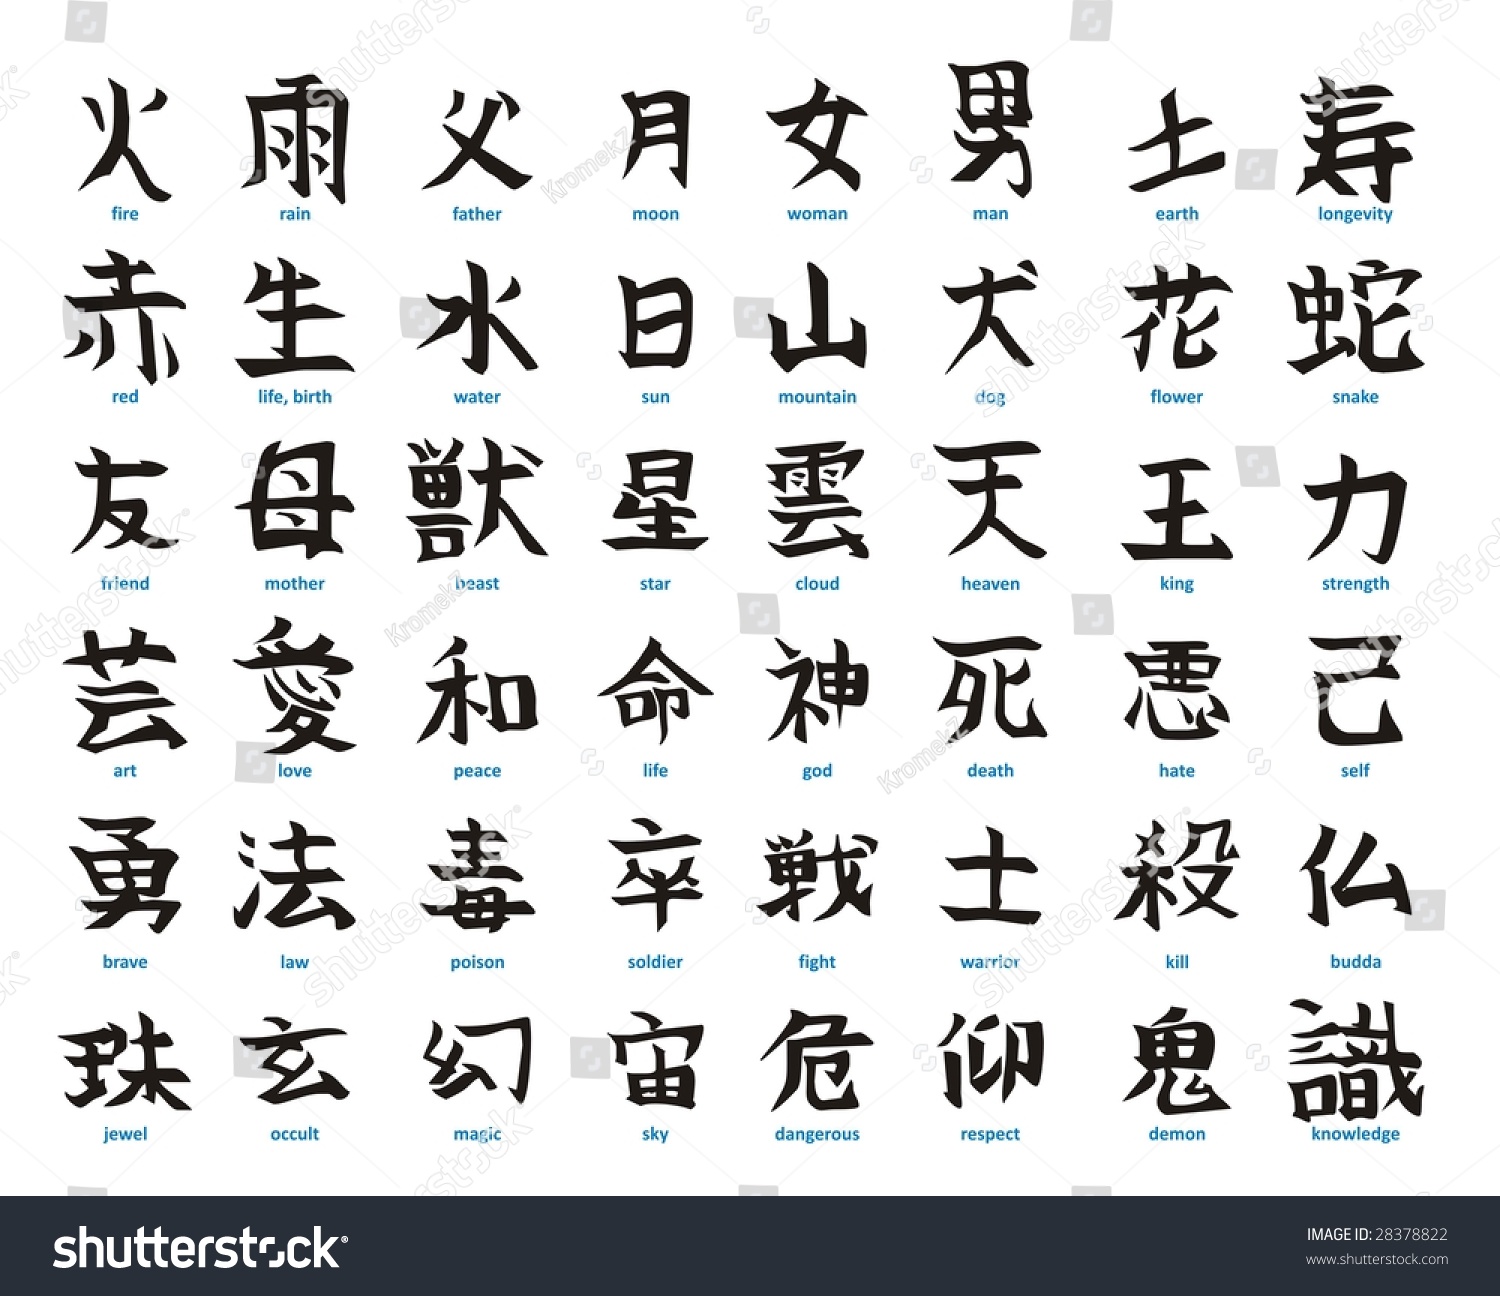 How to write and read kanji